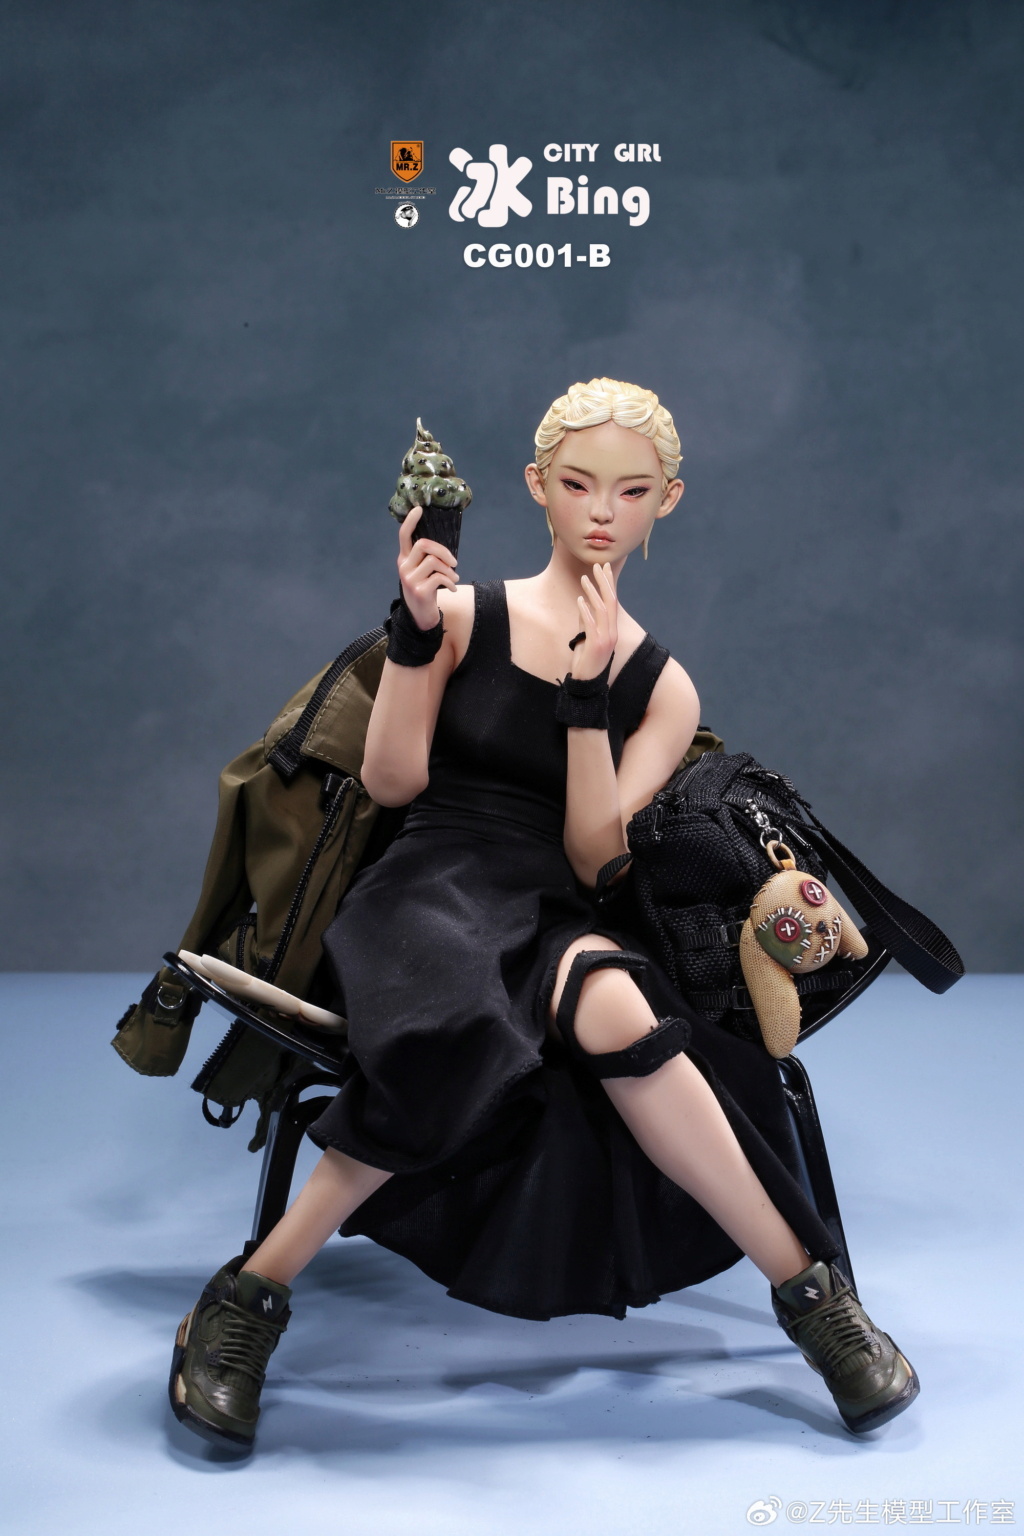 ModelStudio - NEW PRODUCT: Mr.Z model studio - city series first urban girl Mu & Bing #CG001-A/B 6b270b29